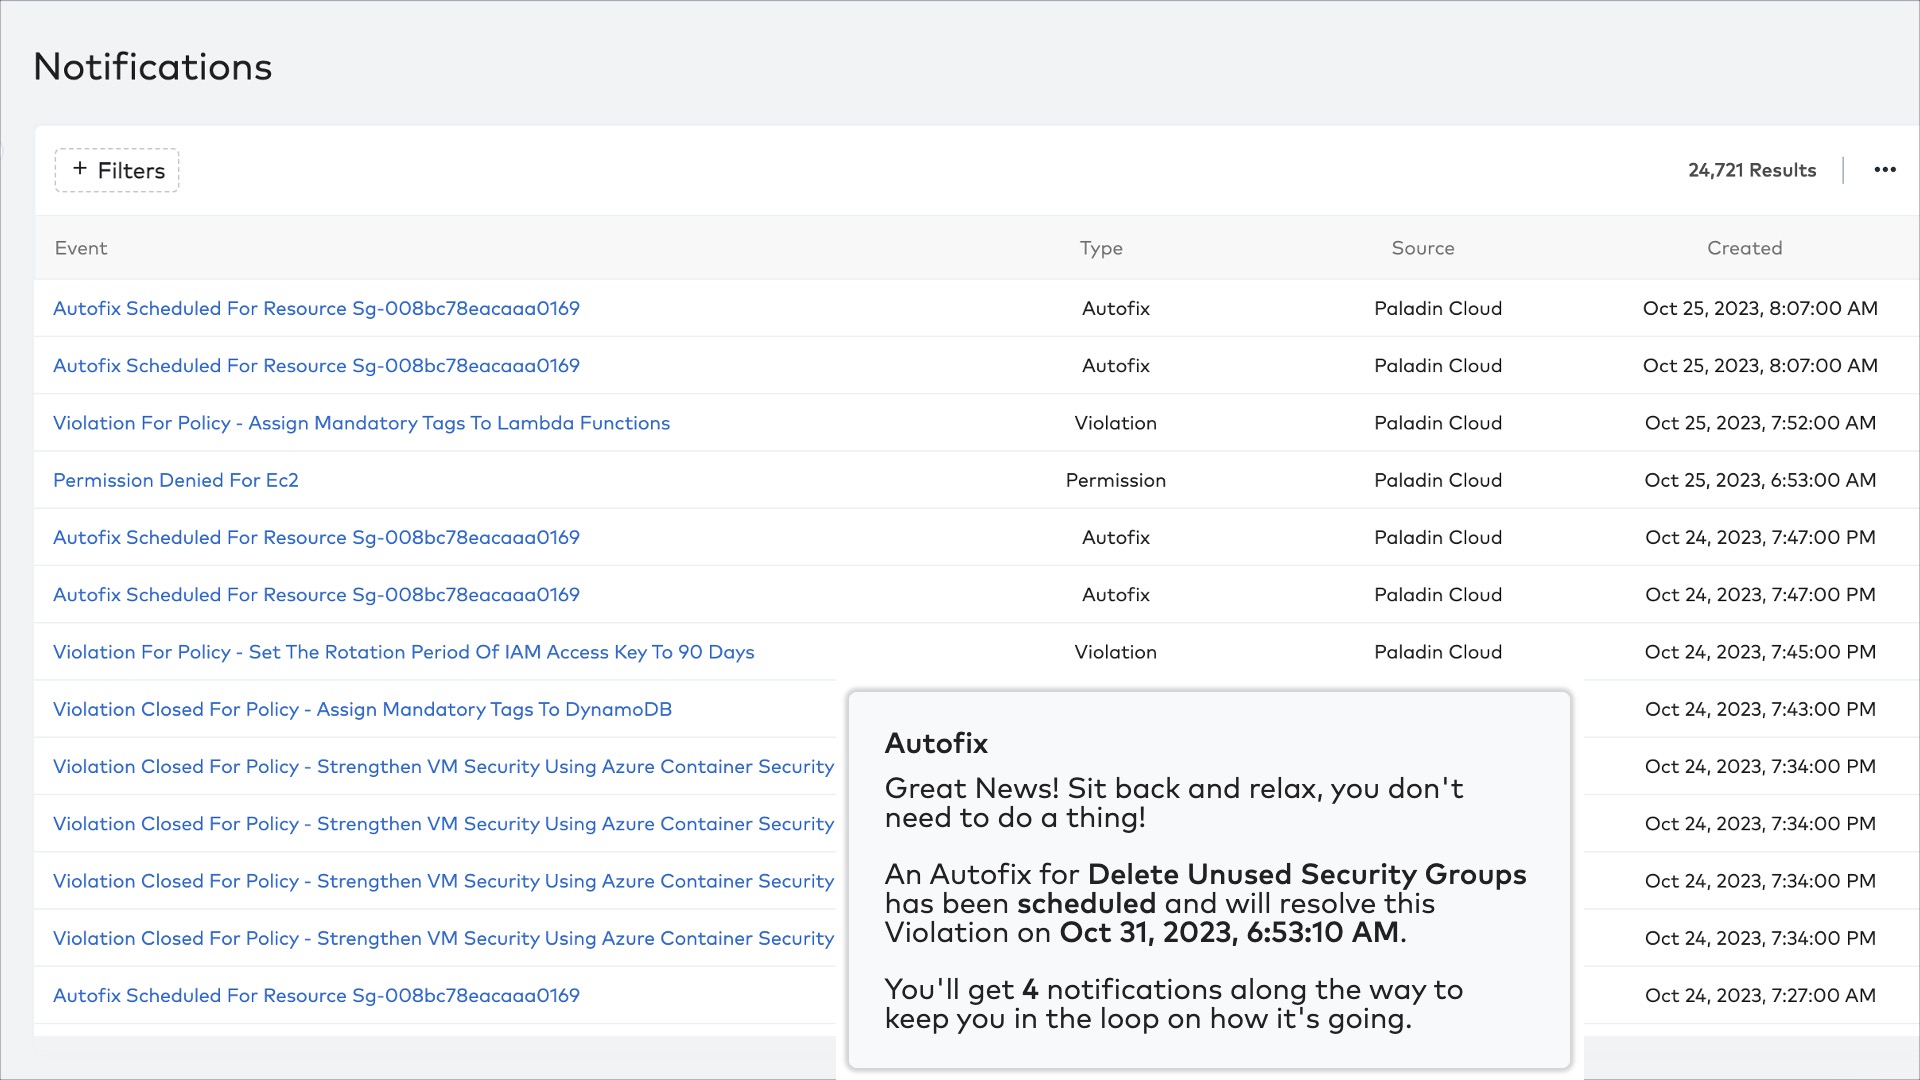 A screenshot of Paladin Cloud's autofix notifications